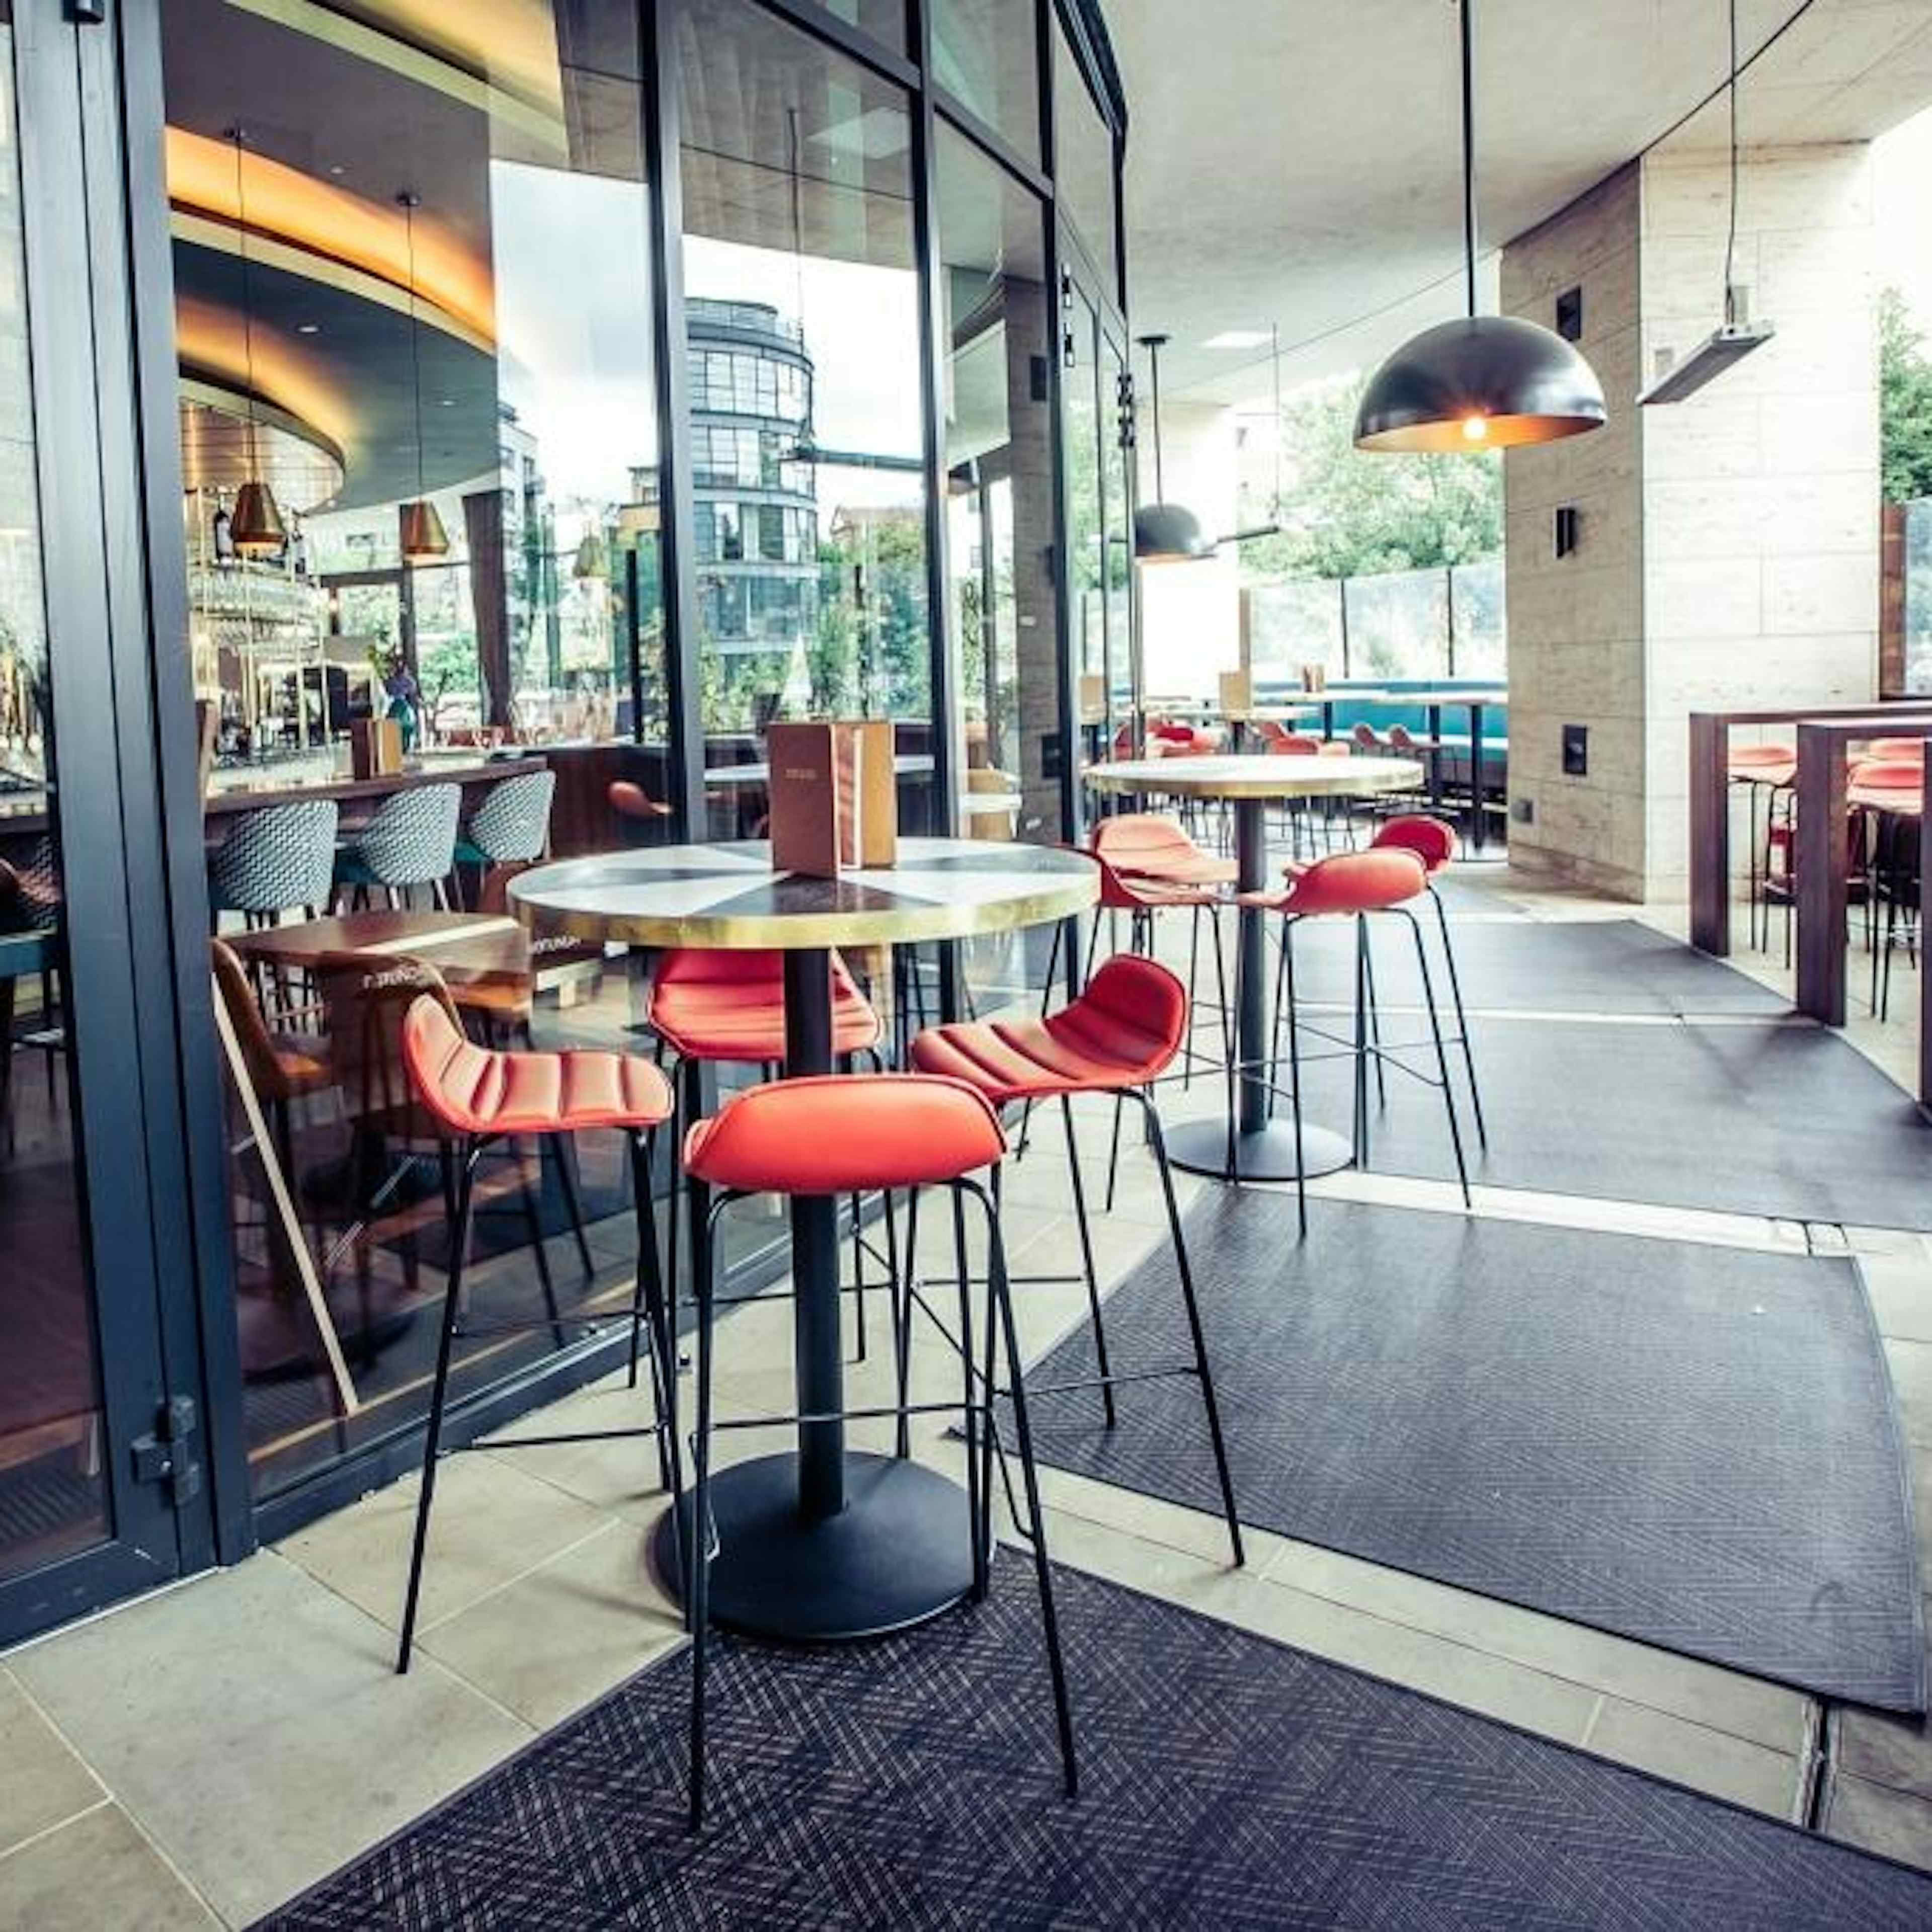 Rotunda Bar and Restaurant  - Whole venue image 3